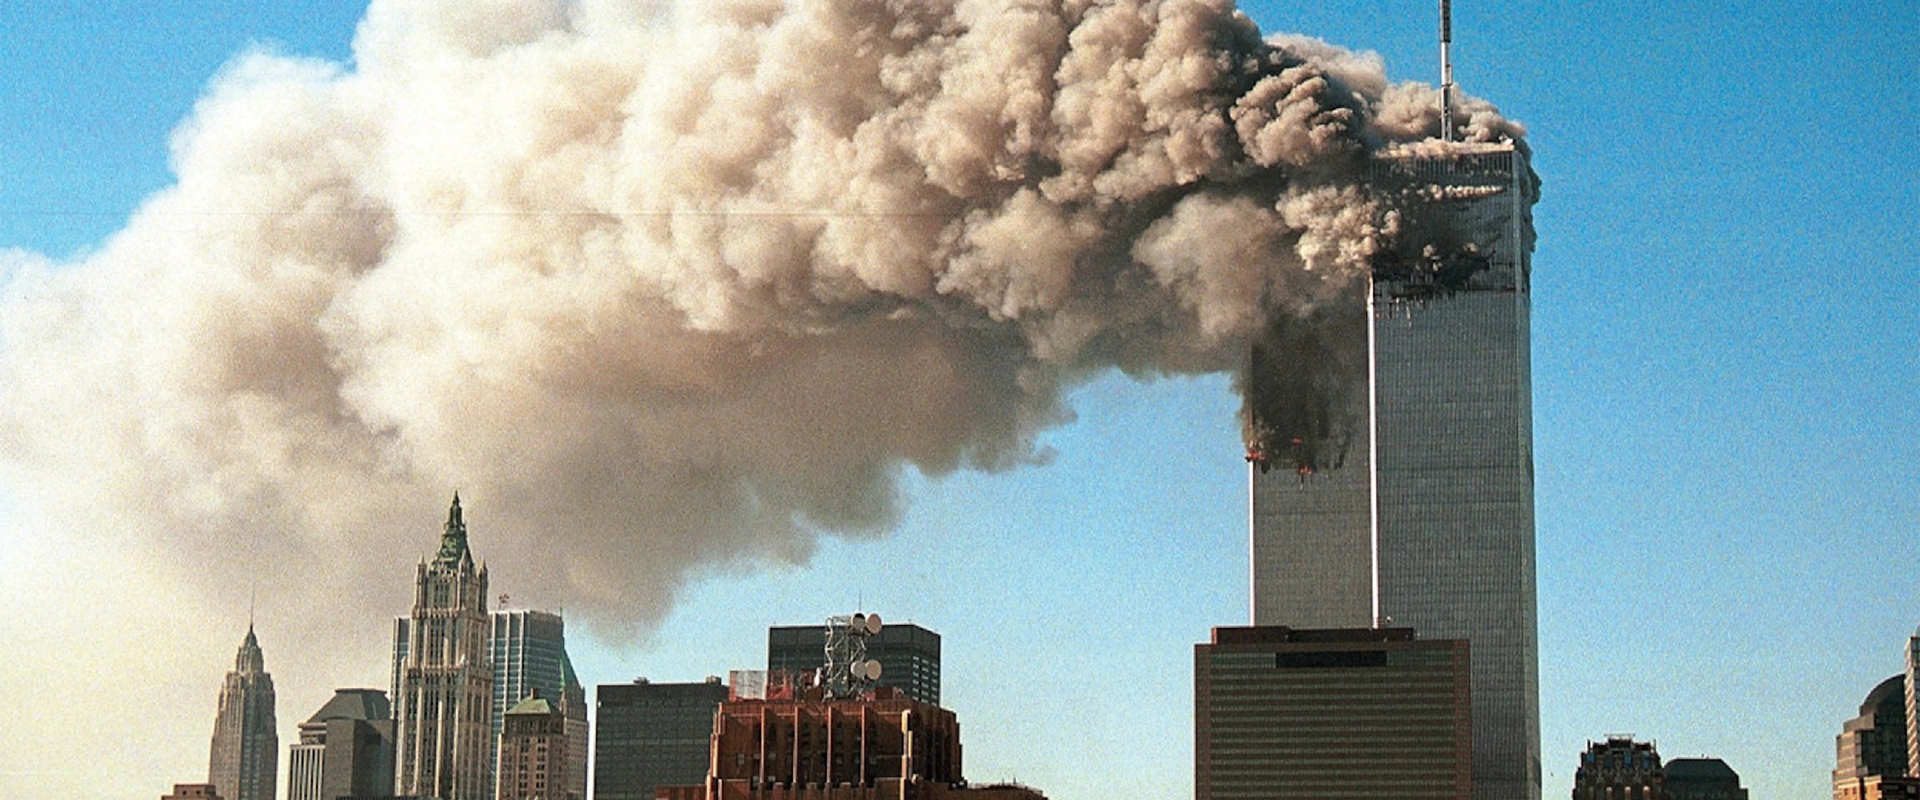 9/11 Terrorist Attacks - The Timeline